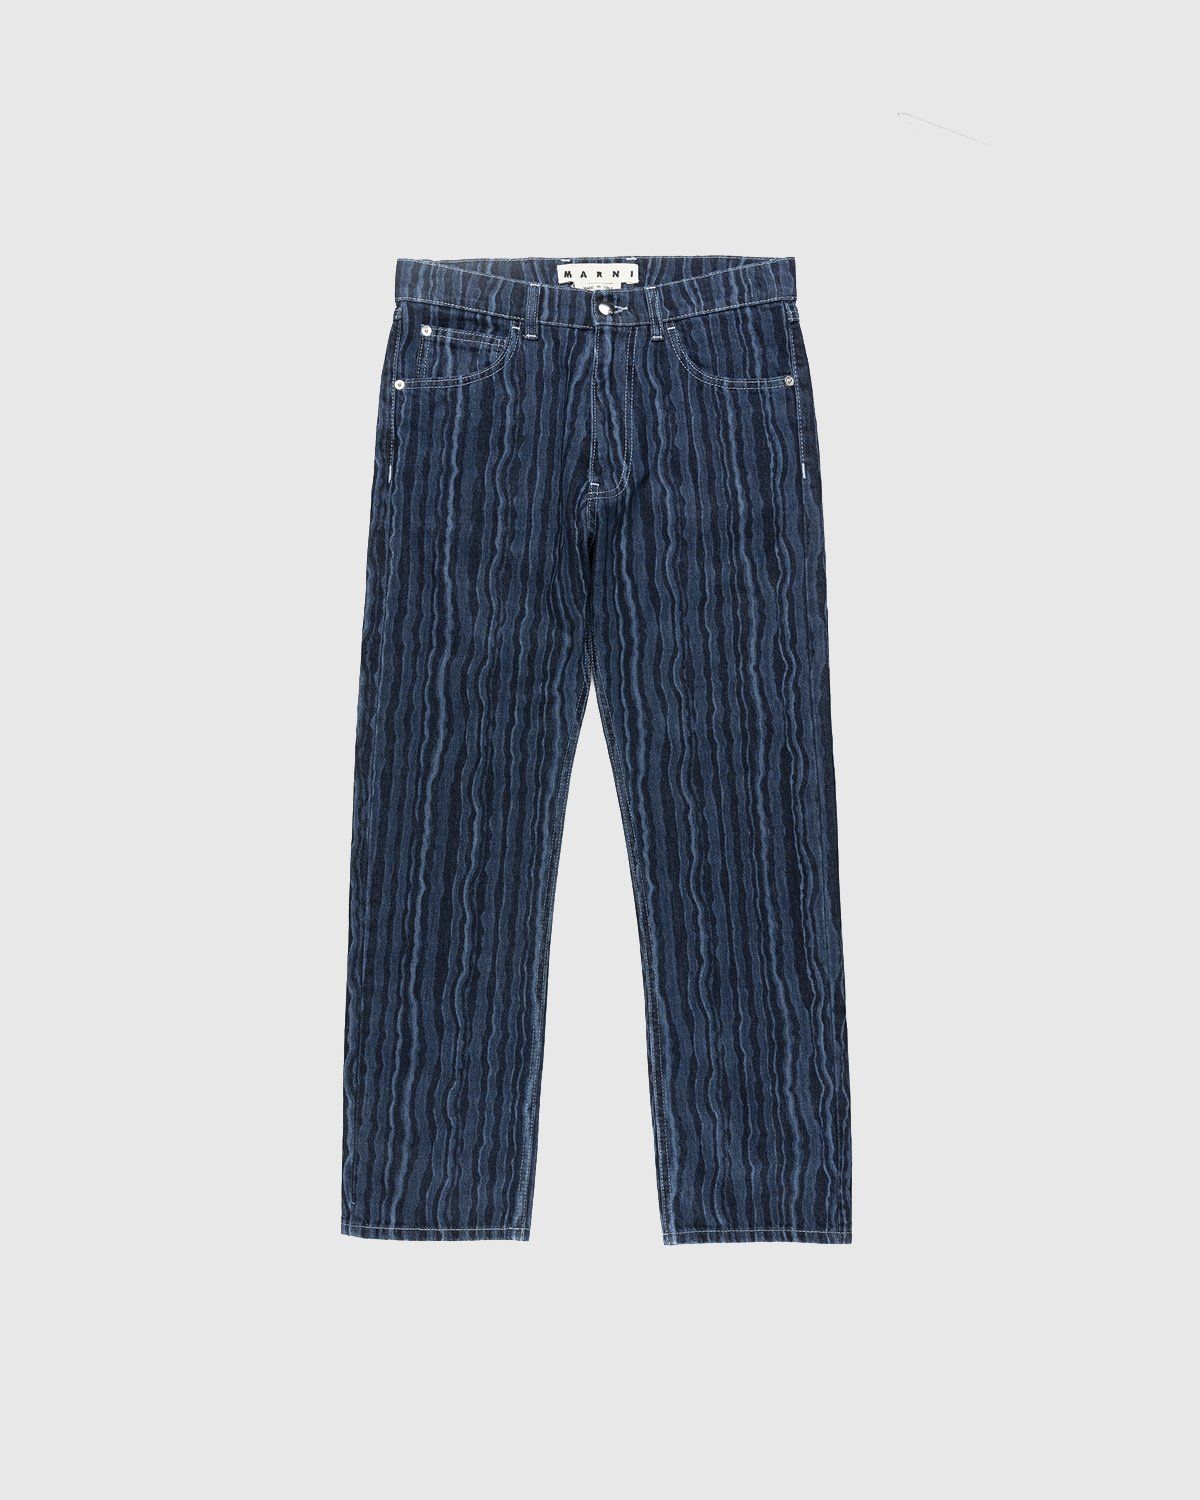 Marni – Abstract Print Wide Leg Jeans Blue - Denim - Blue - Image 1